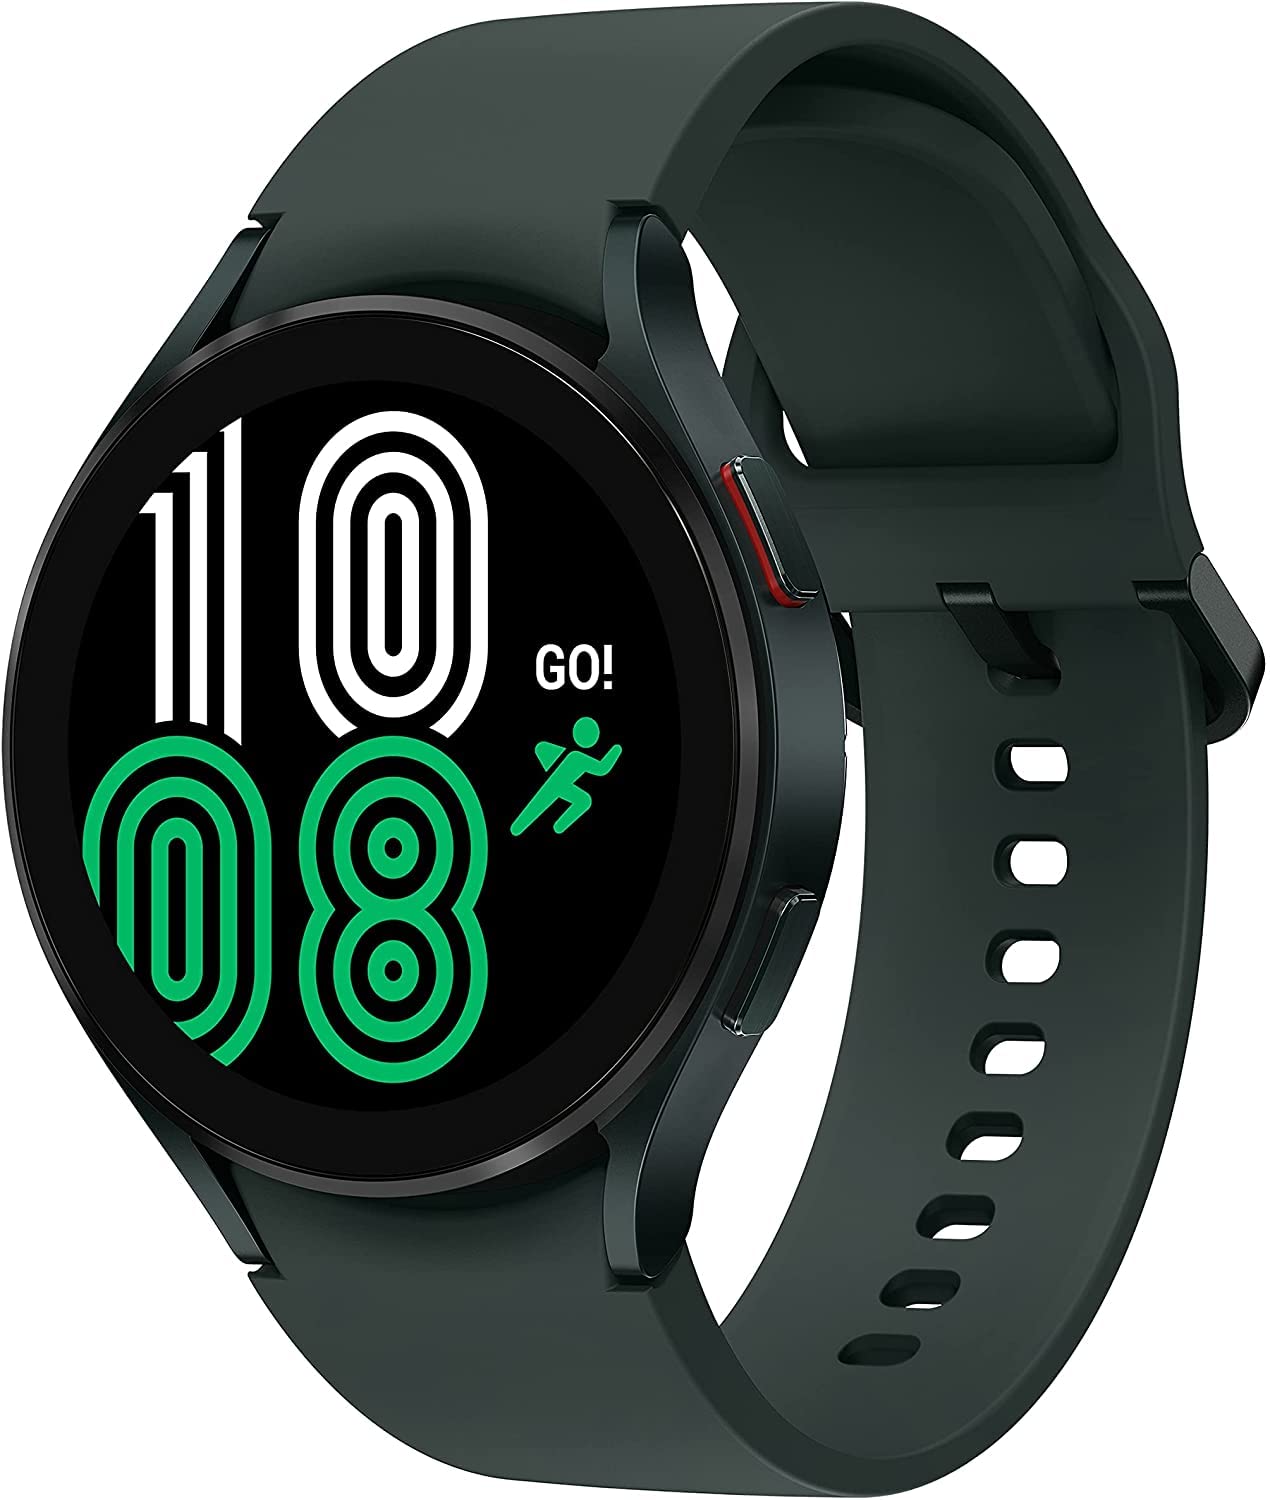 Samsung Galaxy Watch4 BT, Runde Bluetooth Smartwatch, Wear OS, dreh-bare Lünette, Fit-nessuhr, Fitness-Tracker, 44 mm, Green